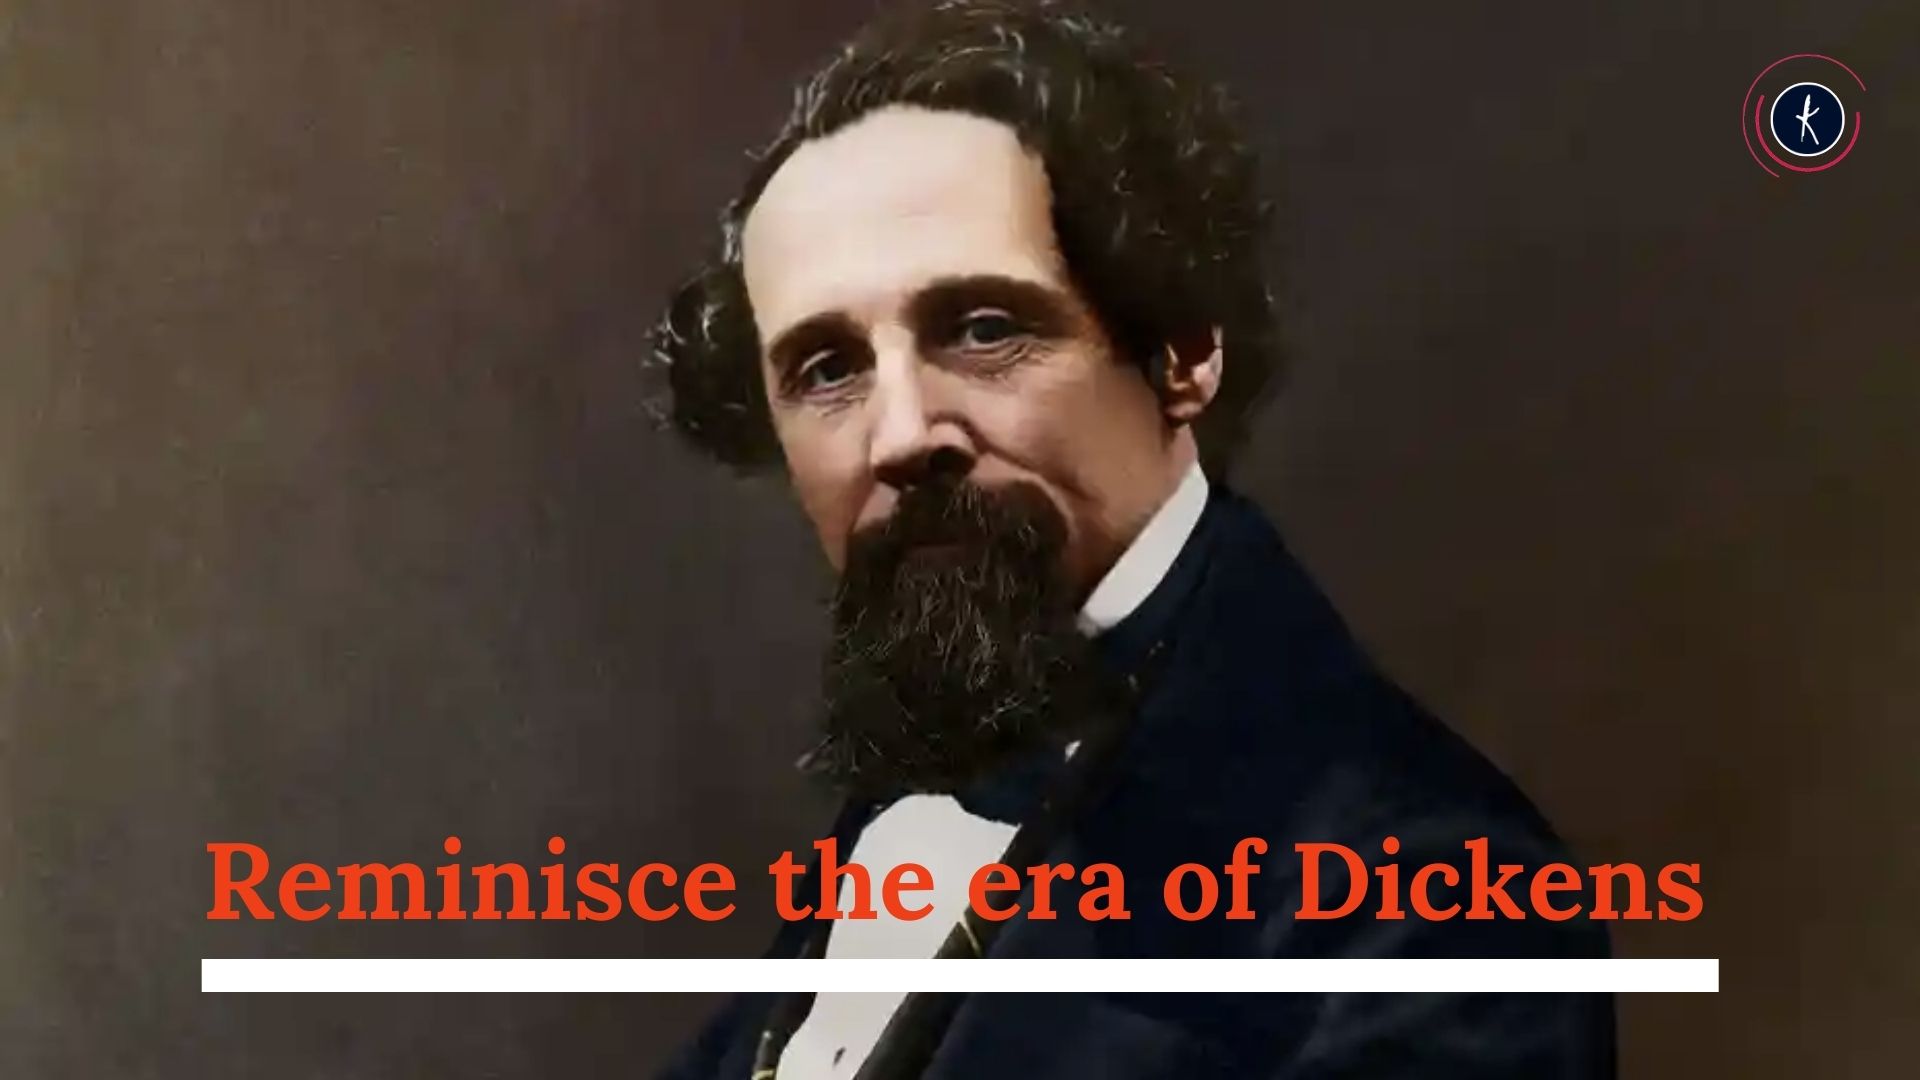 Reminisce the era of Dickens's image